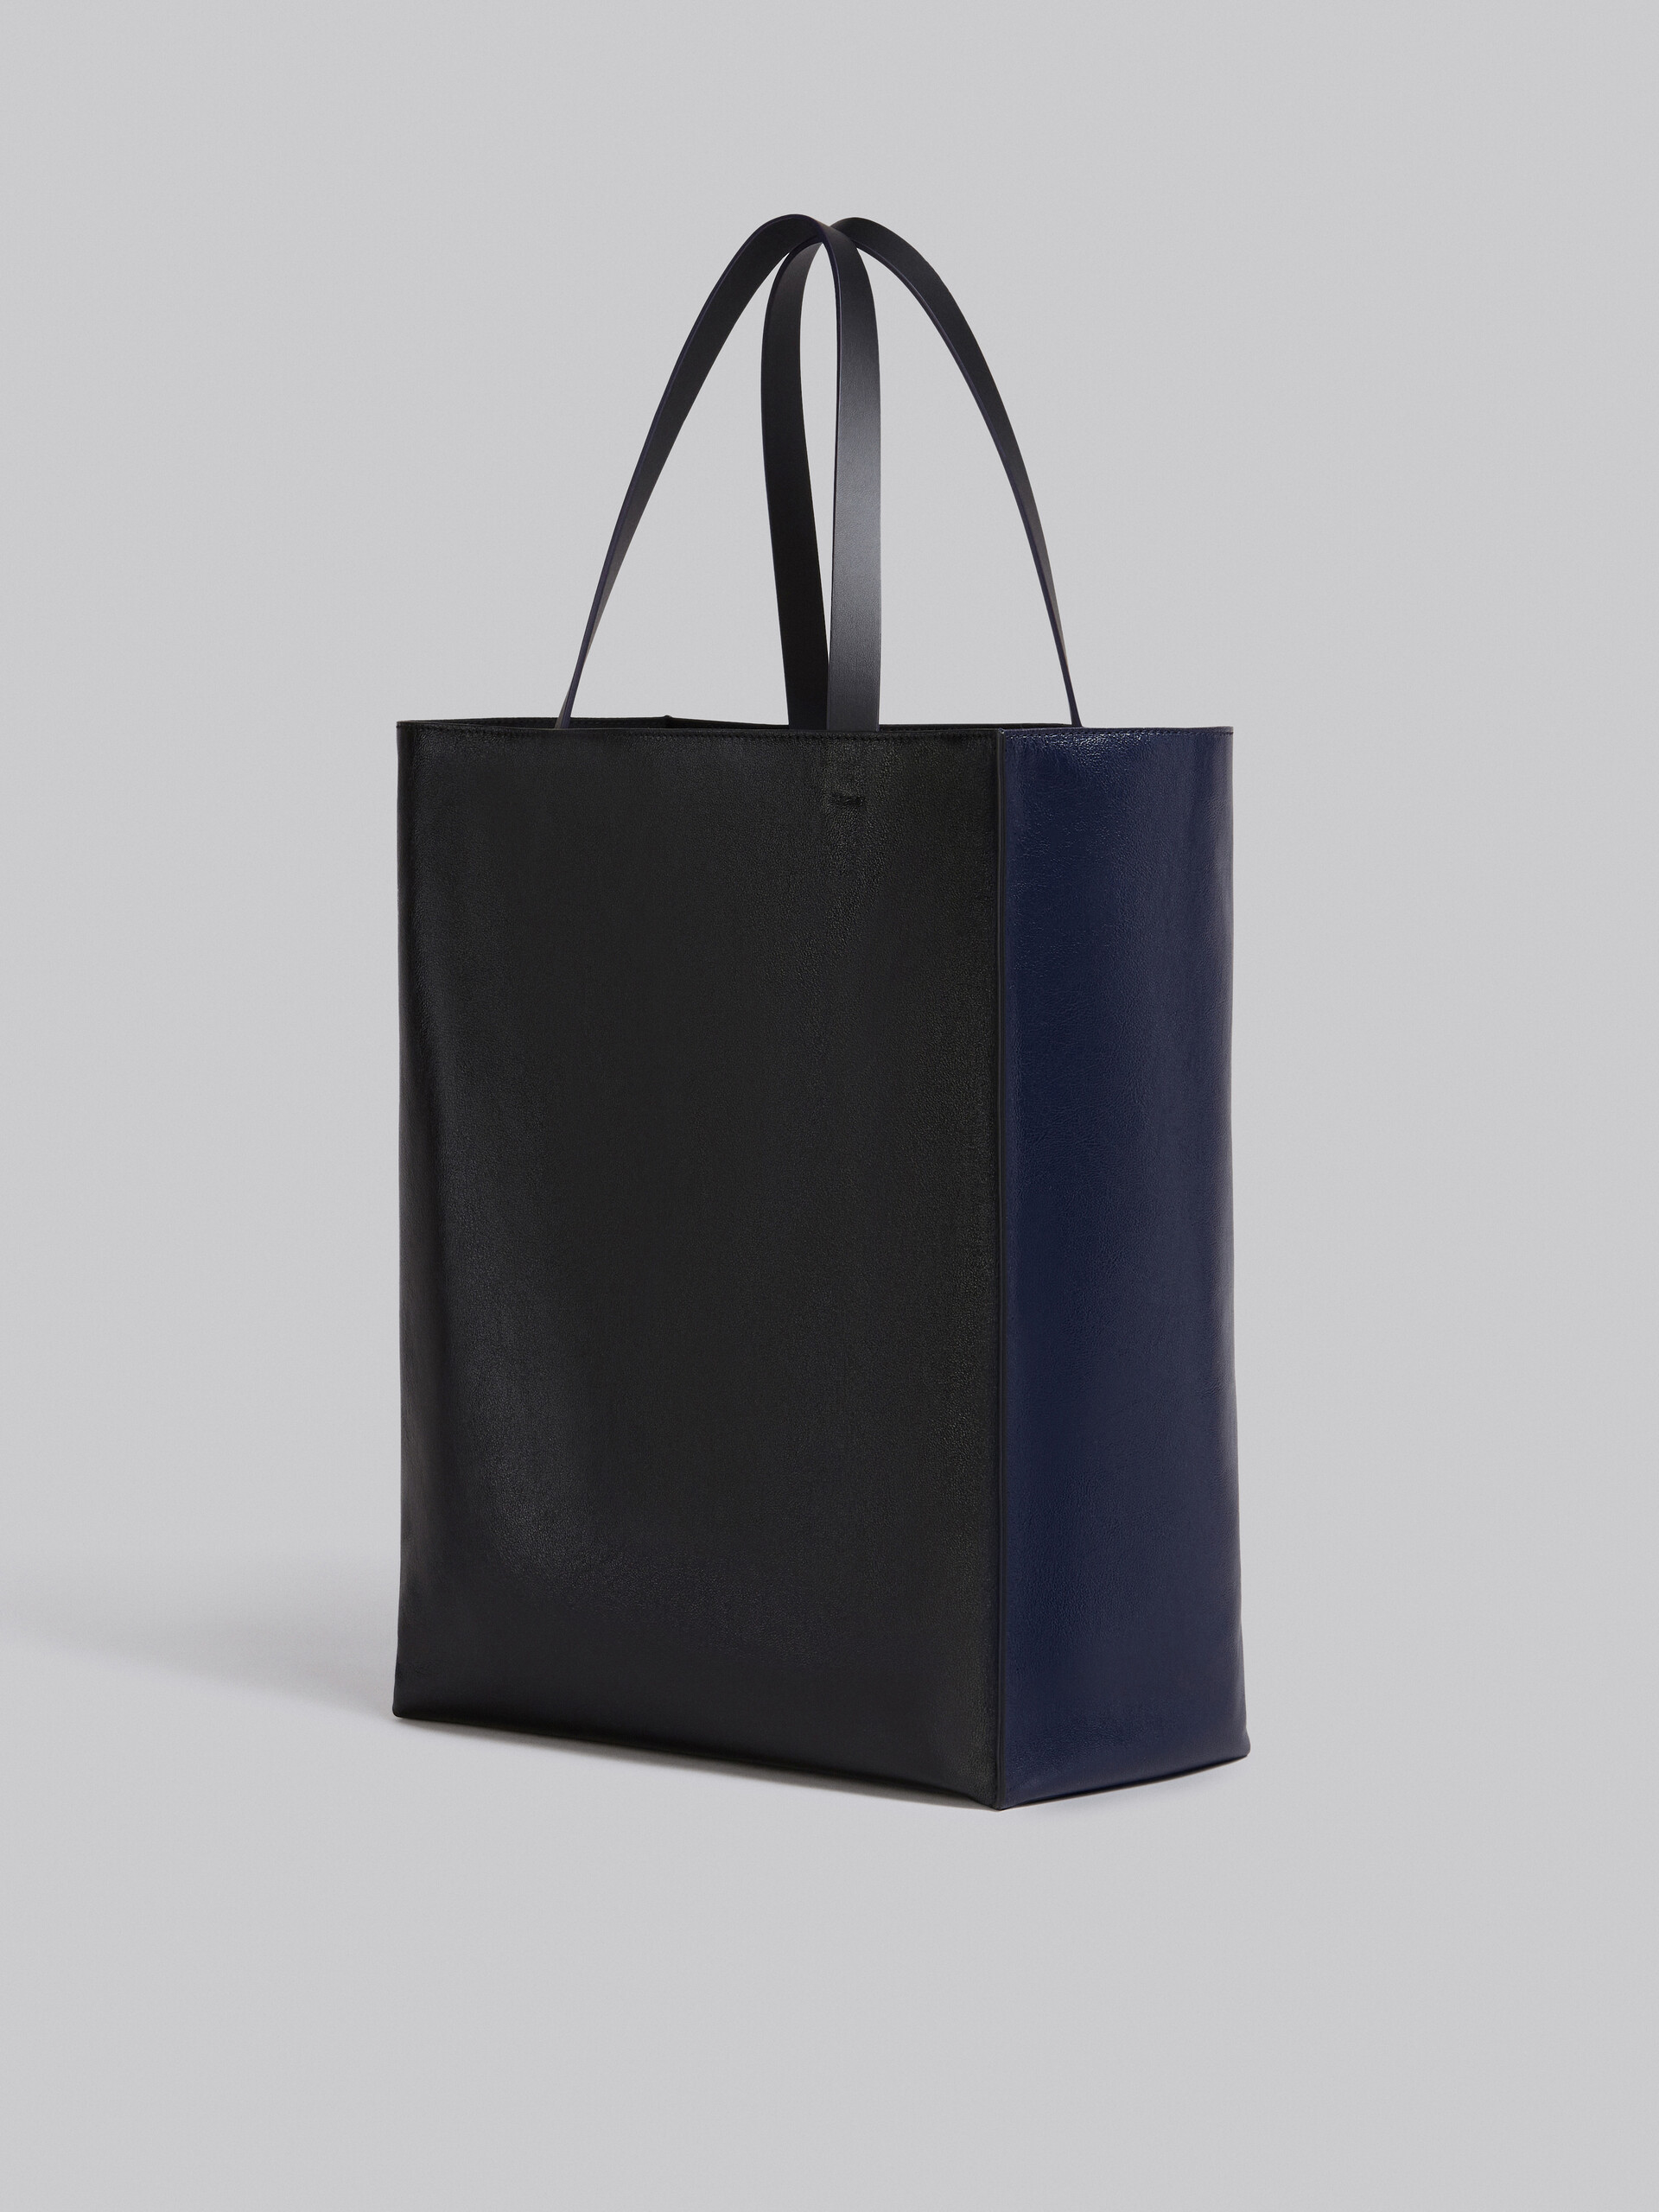 Museo Soft Bag Grande in pelle nera e blu - Borse shopping - Image 3